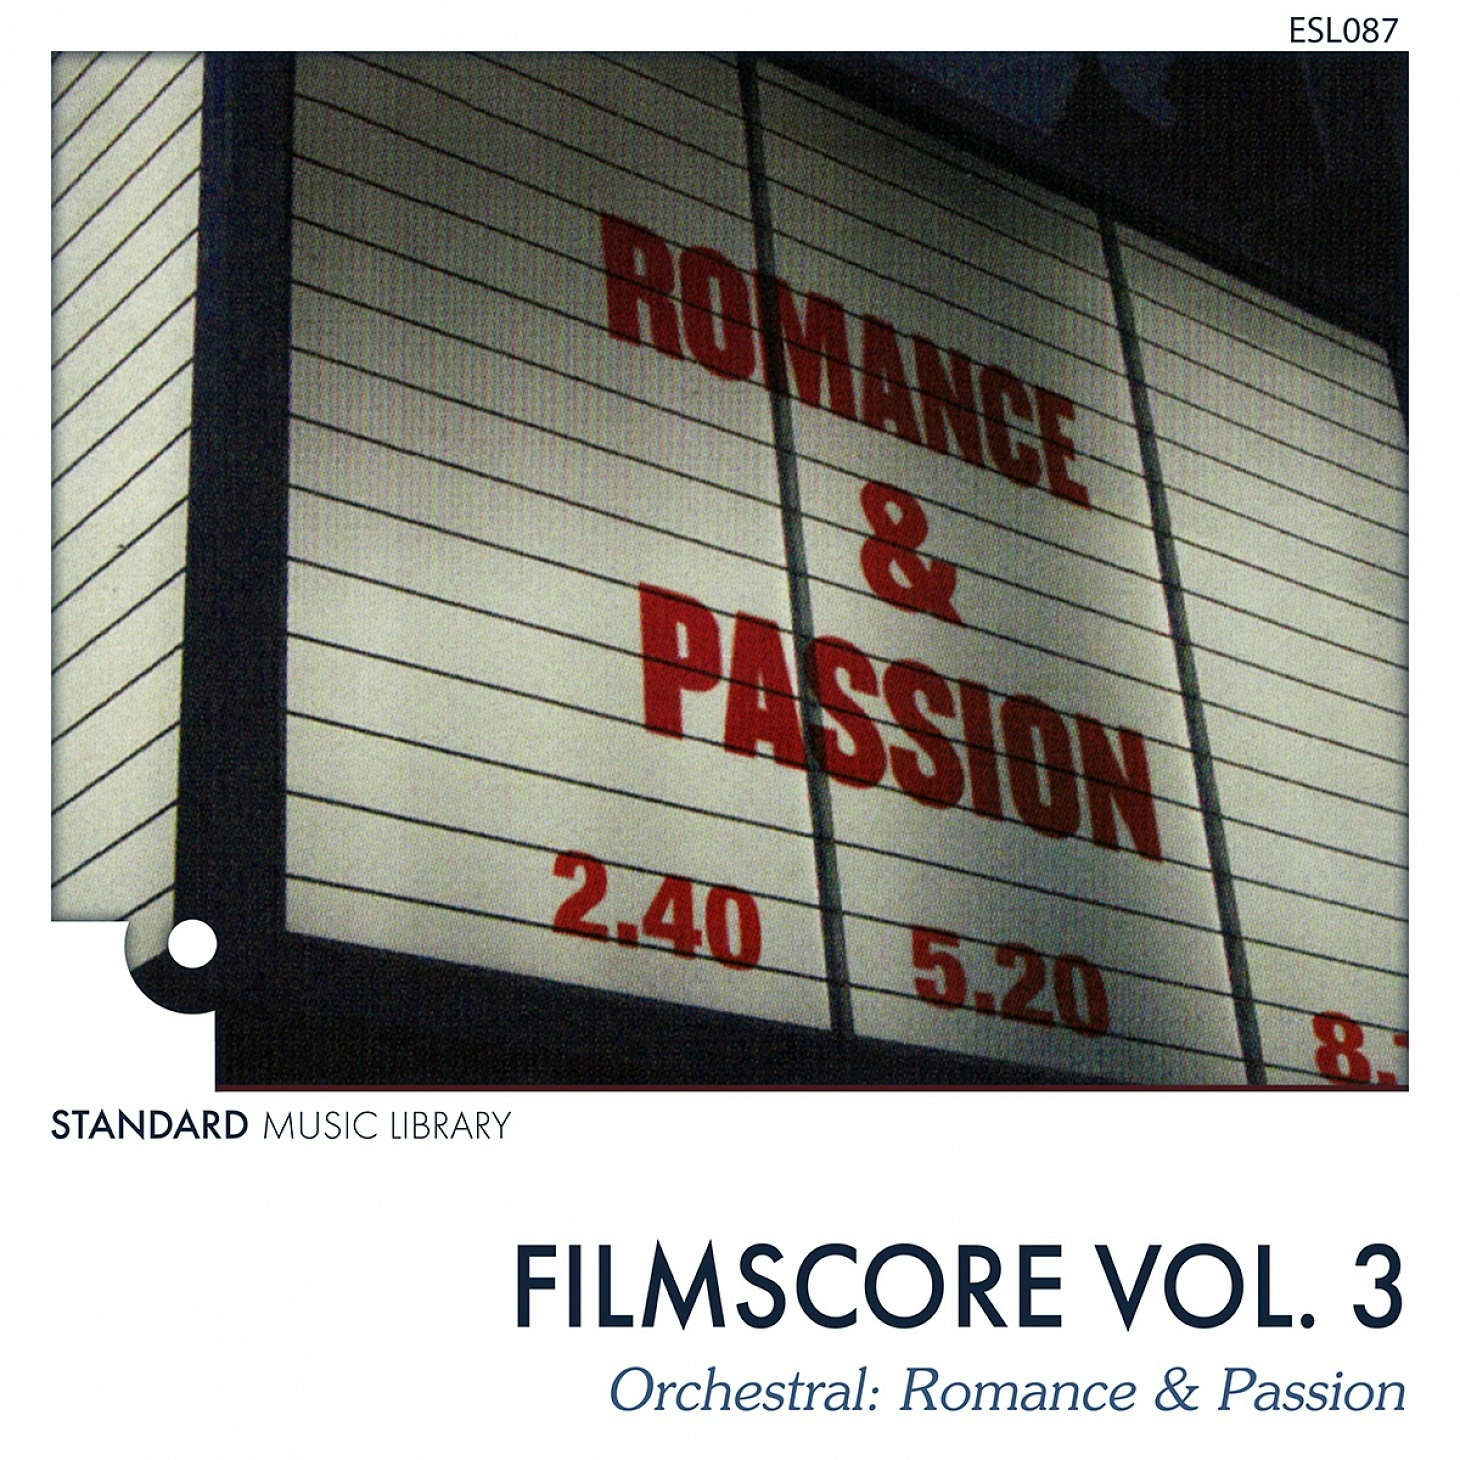 Filmscore Vol. 3 - Reflection, Romance & Passion